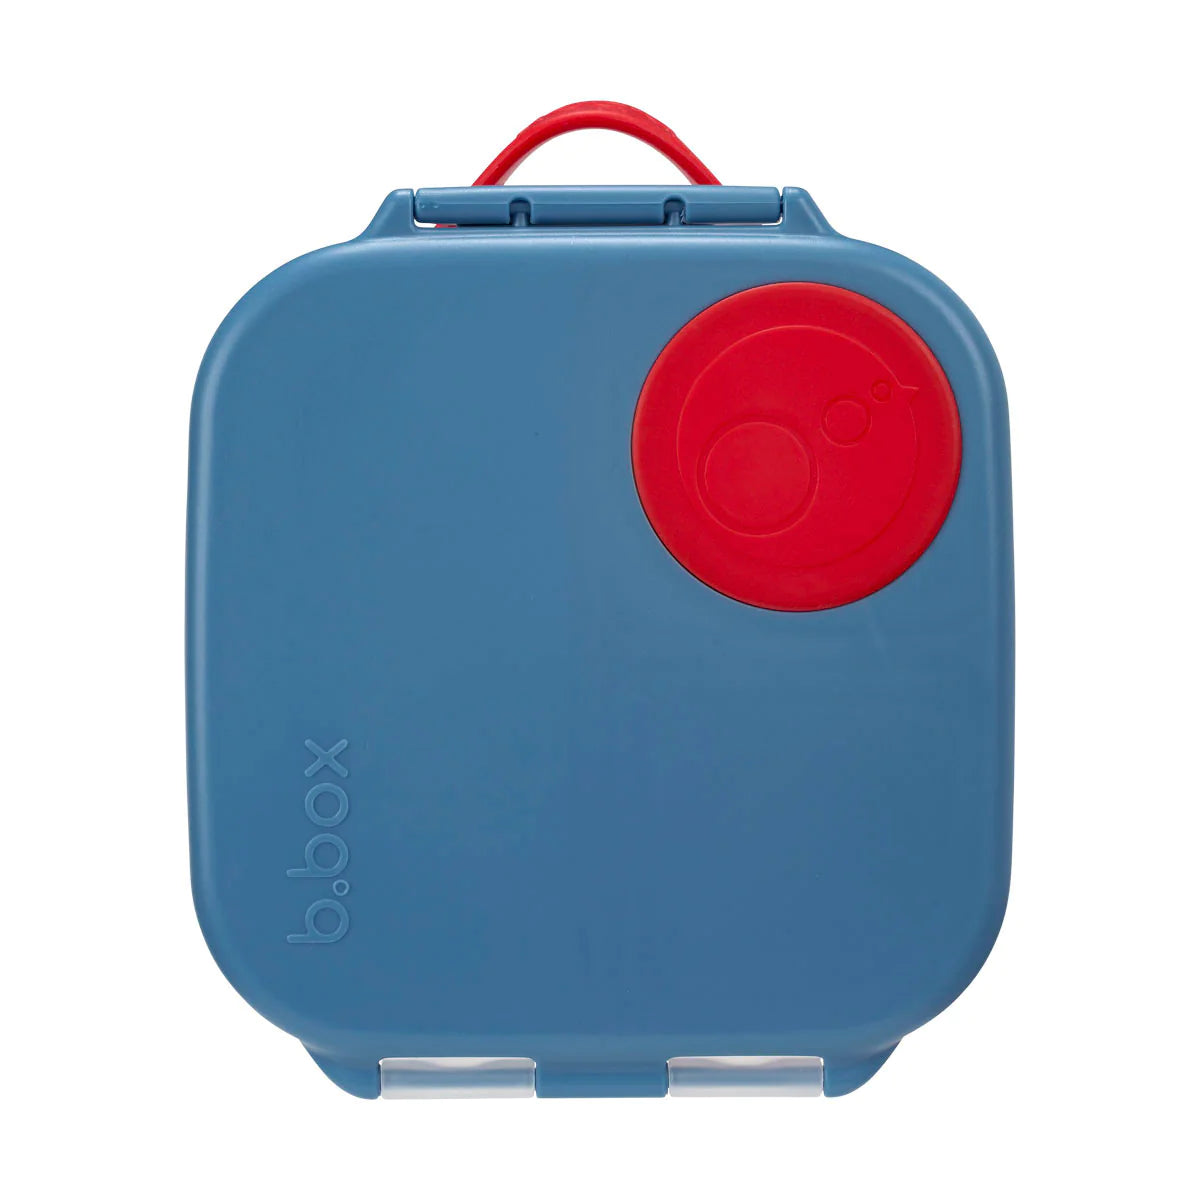 b.box Mini Lunchbox in Blue Blaze available at Bear & Moo